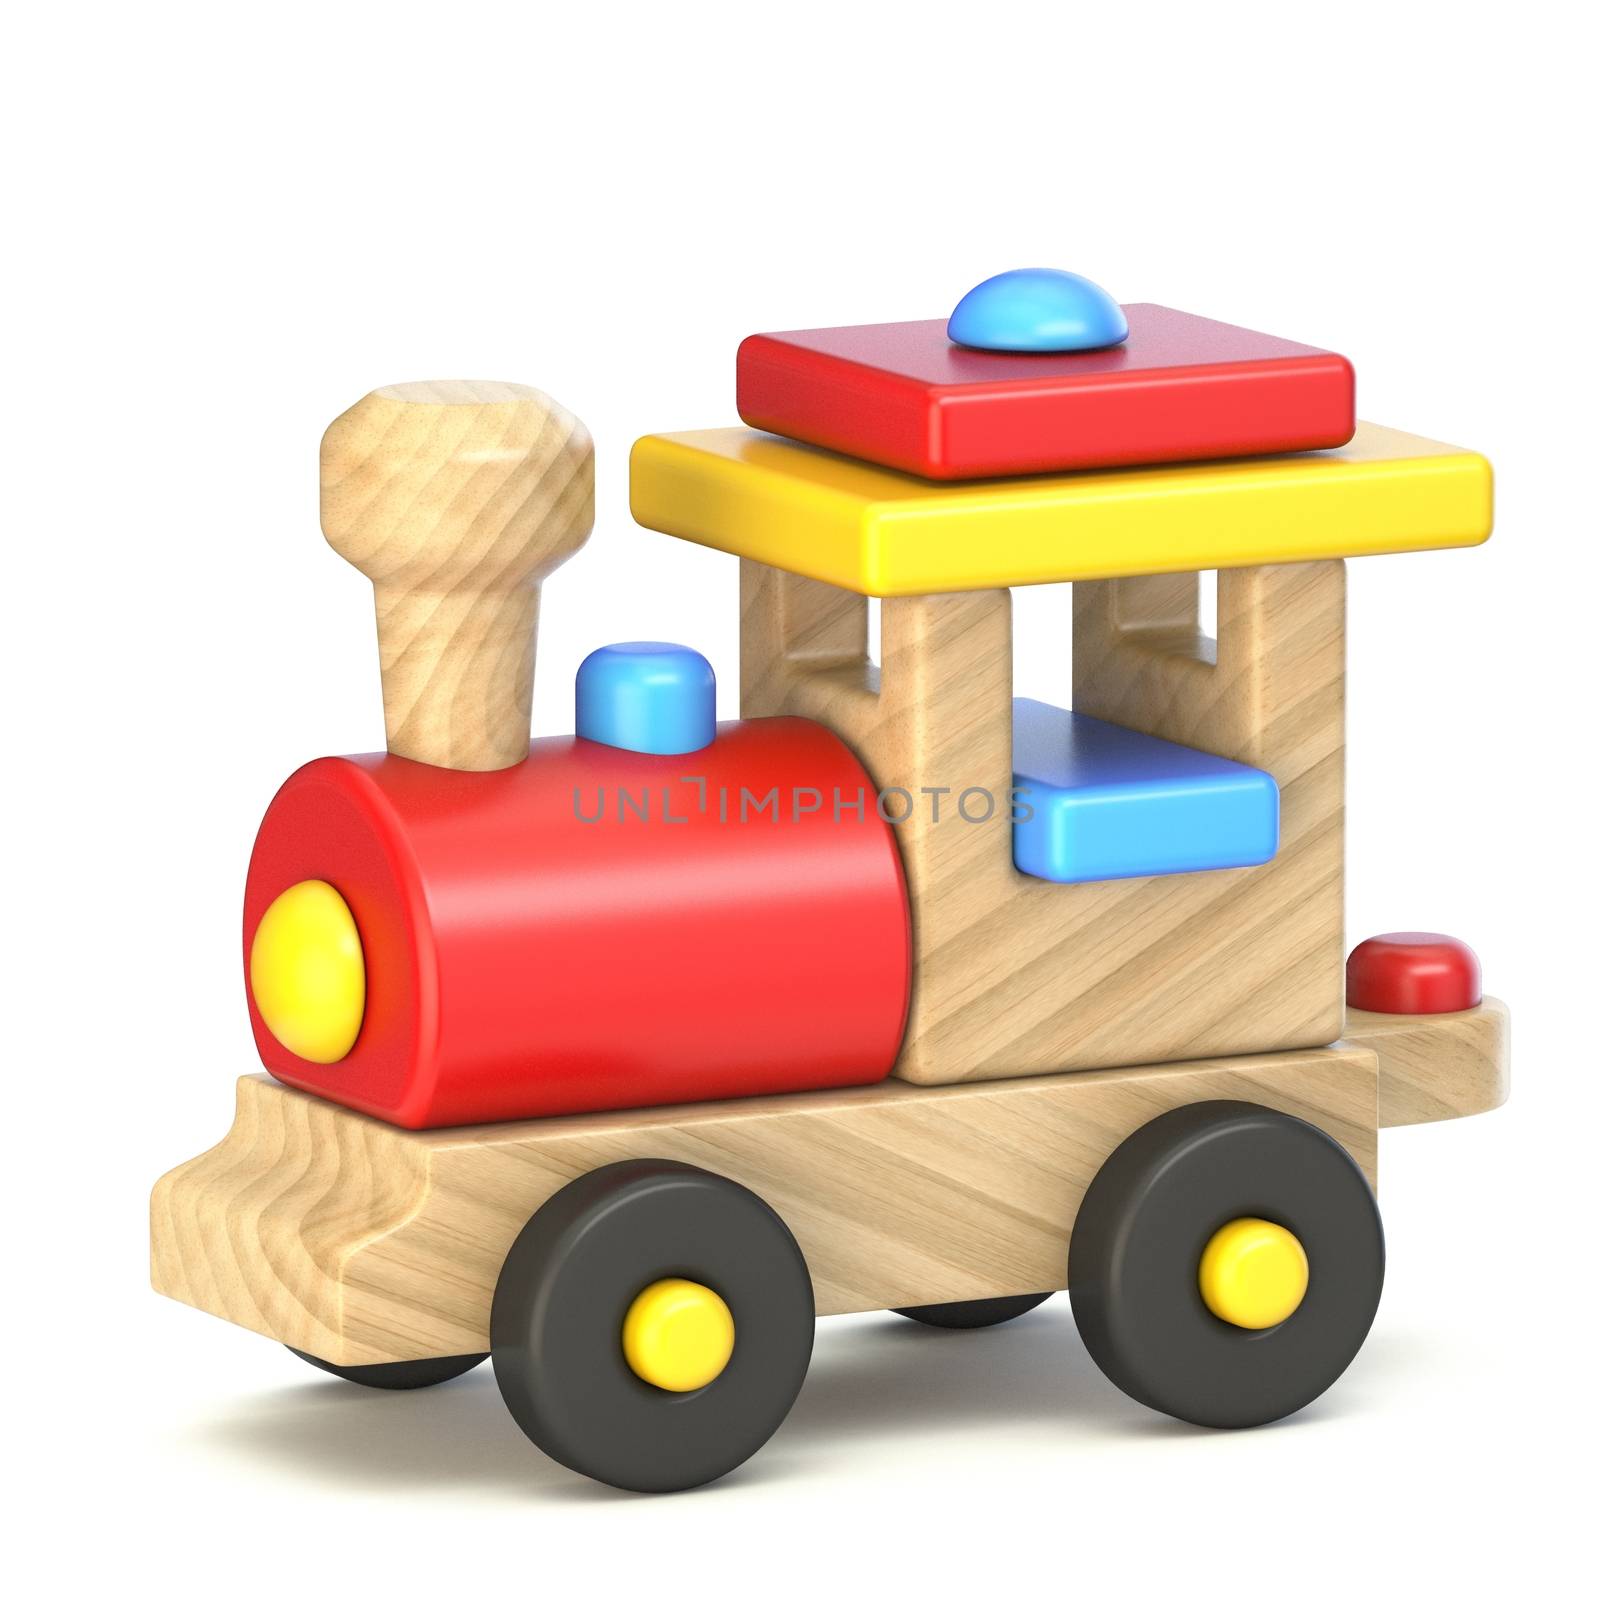 Wooden train locomotive 3D by djmilic